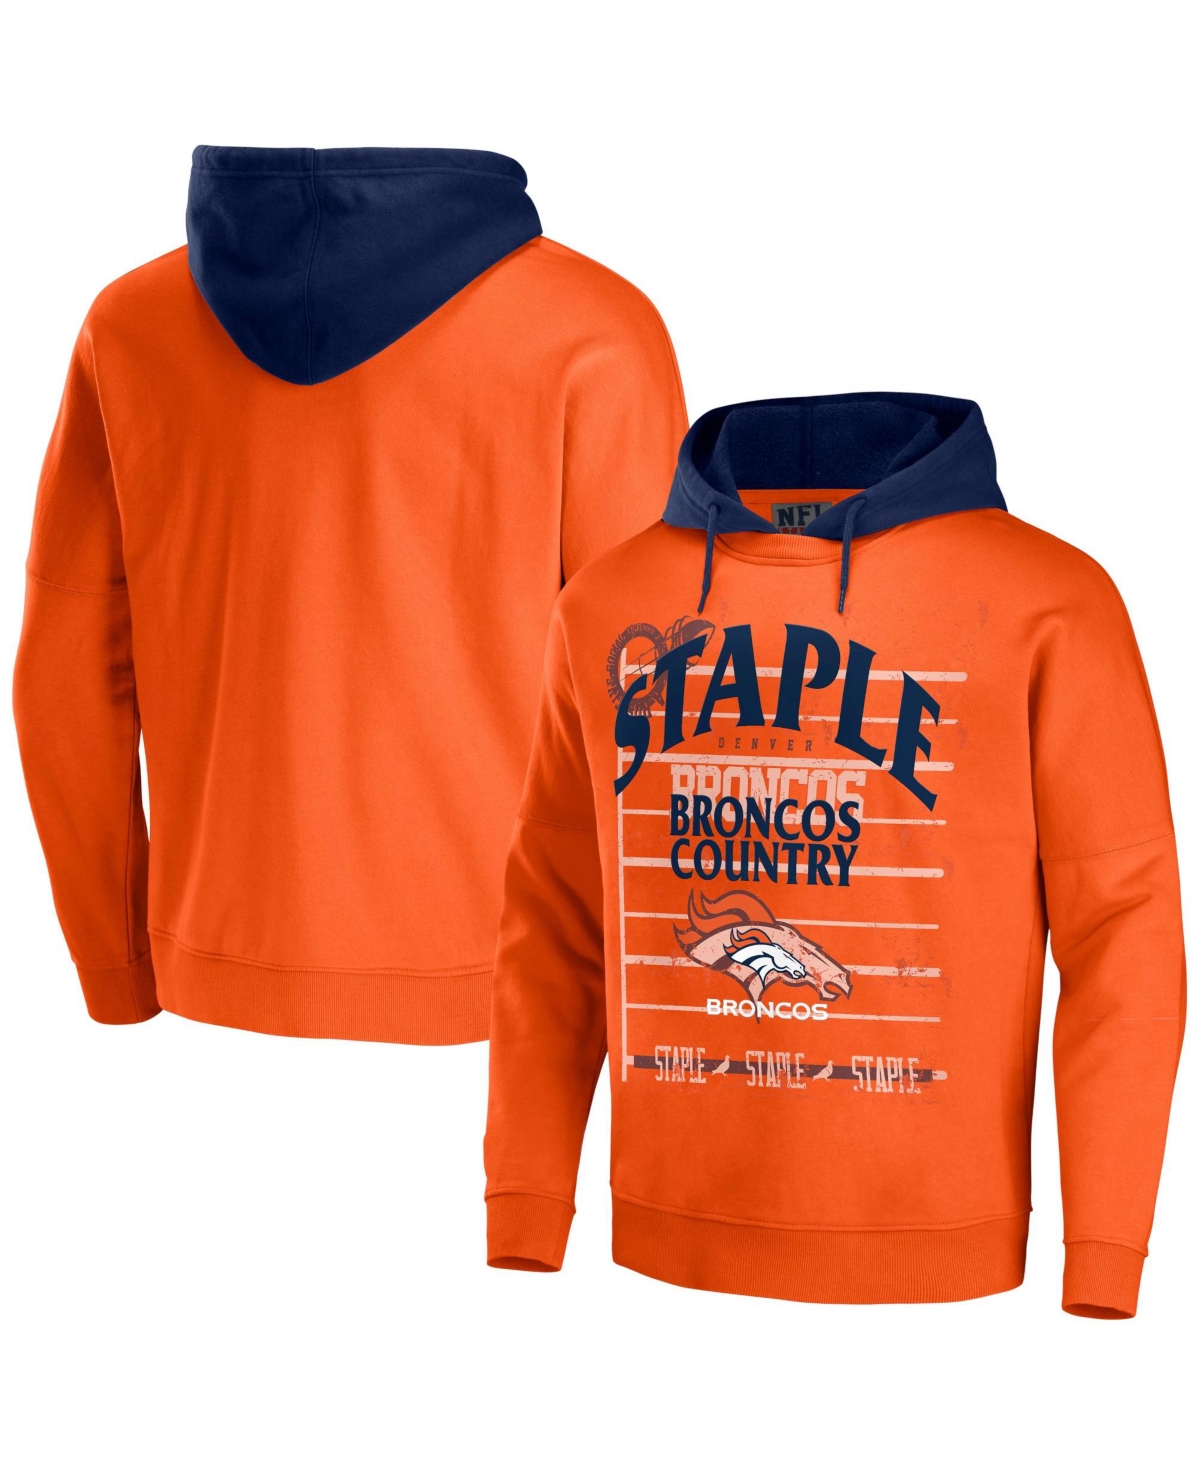 Men's Nfl X Staple Orange Denver Broncos Oversized Gridiron Vintage-Like Wash Pullover Hoodie - Orange